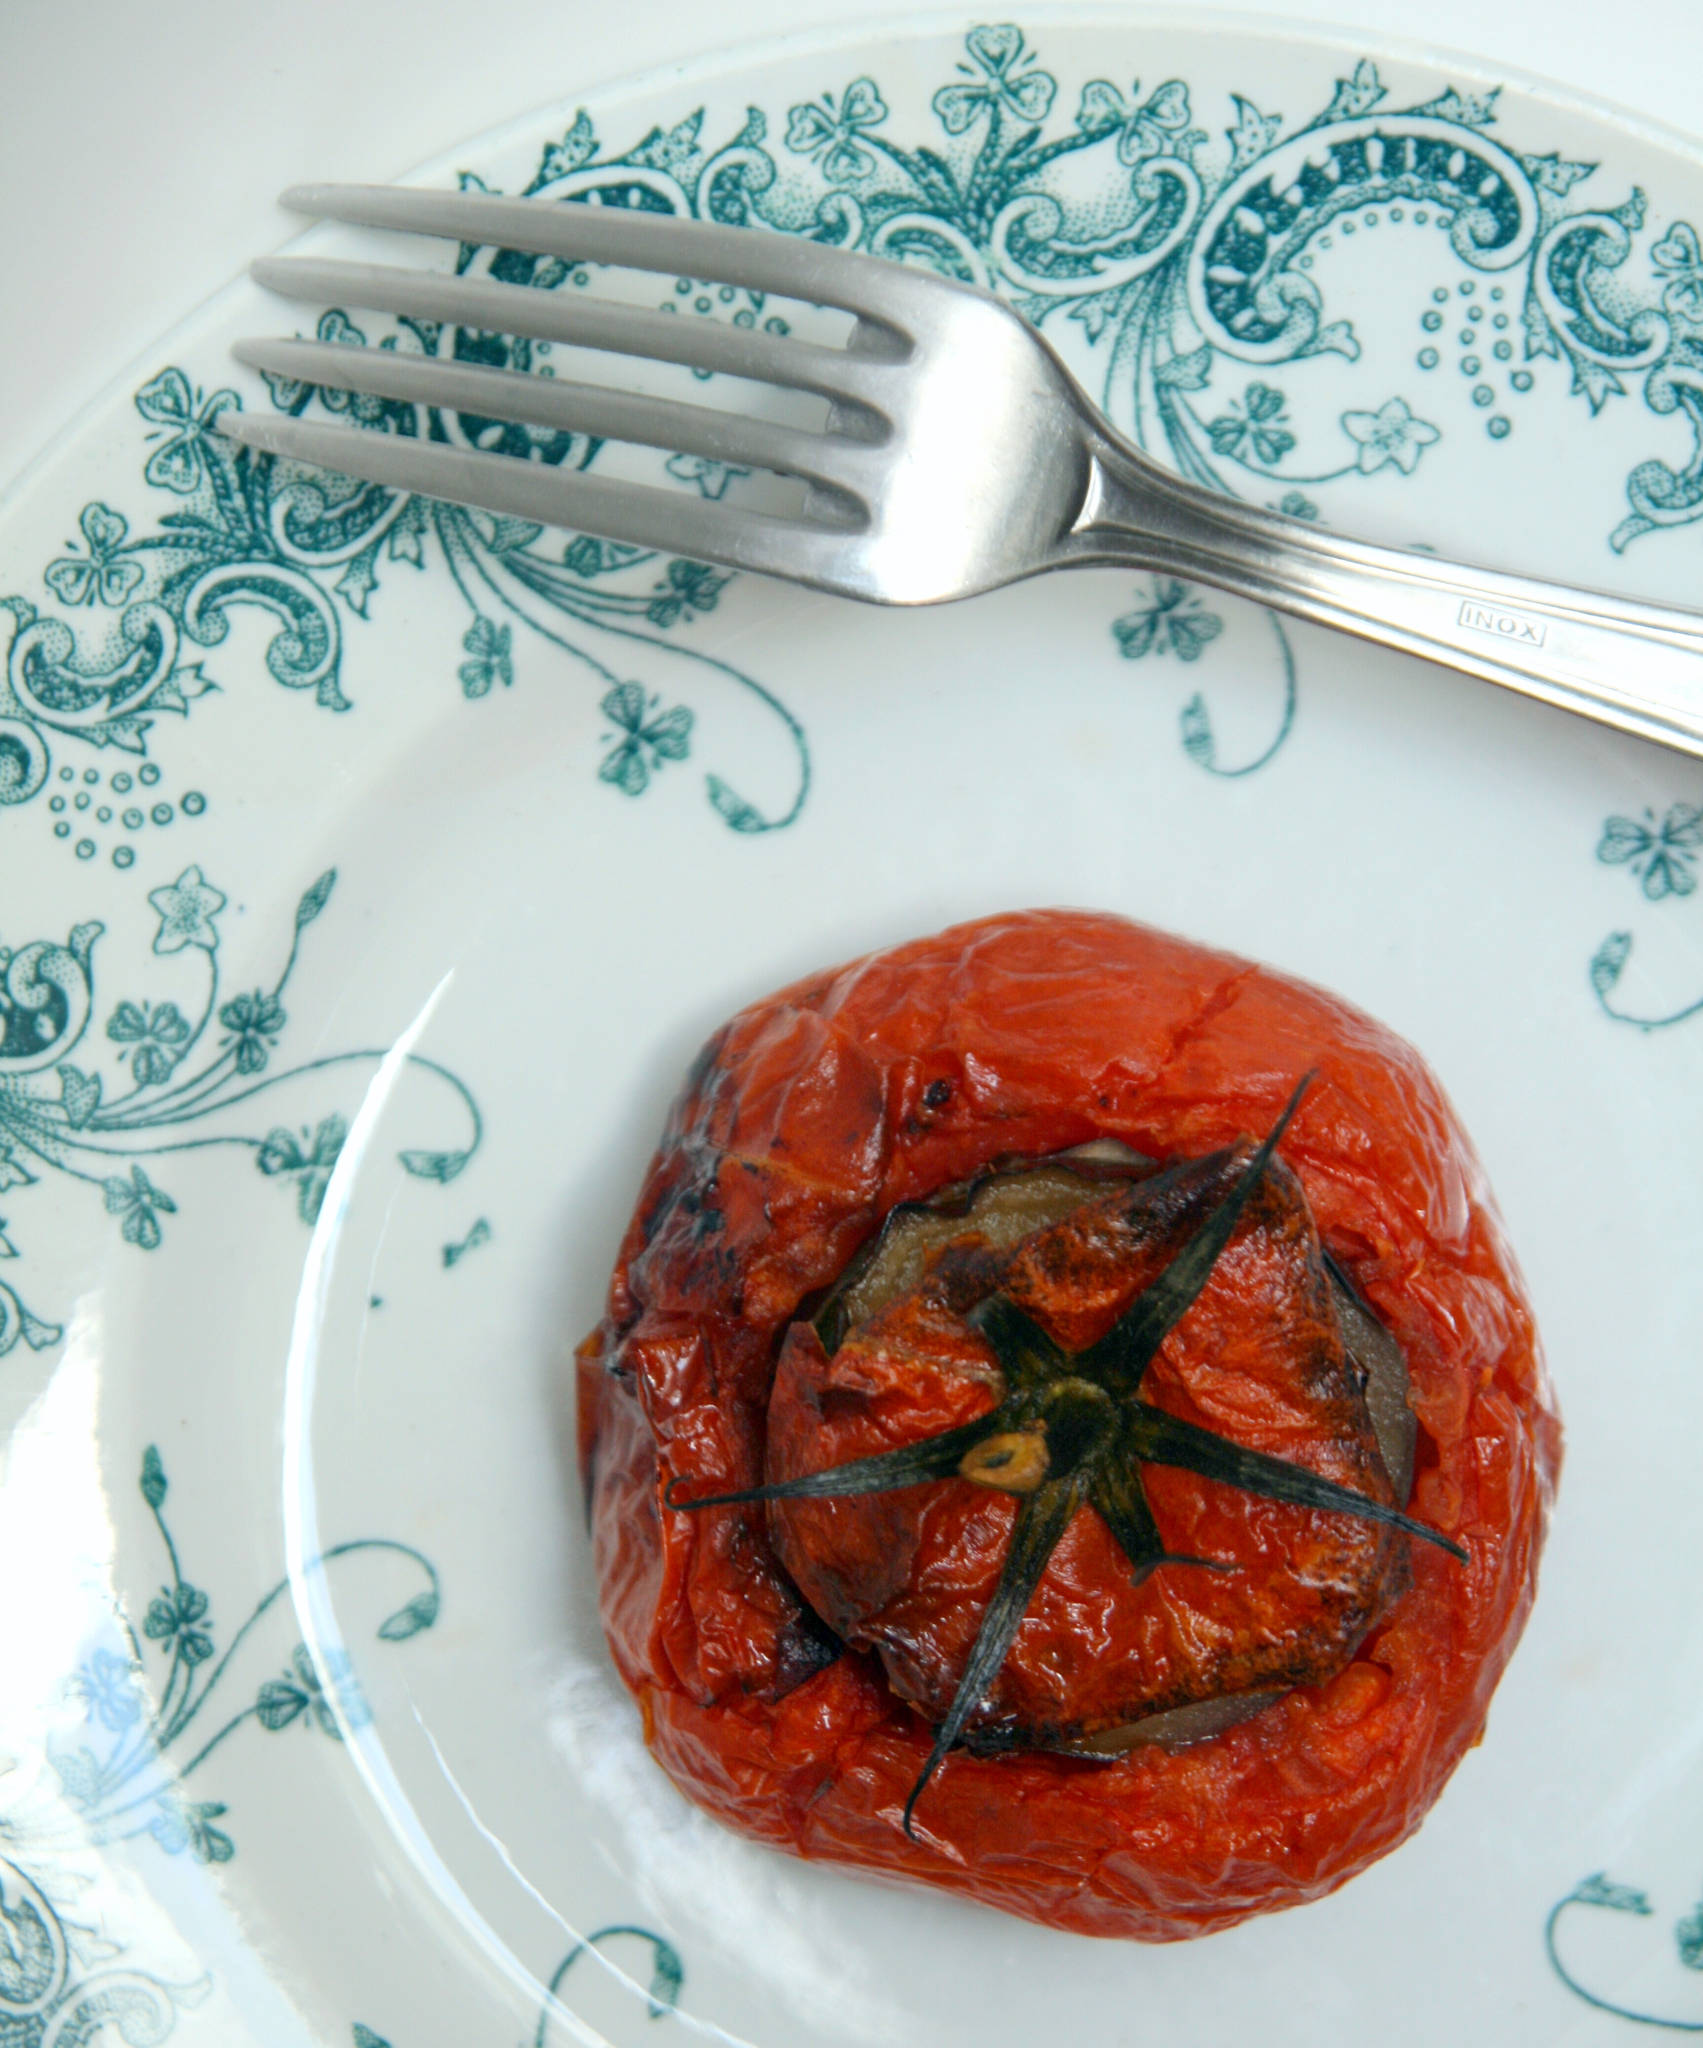 Tomates farcies végétariennes